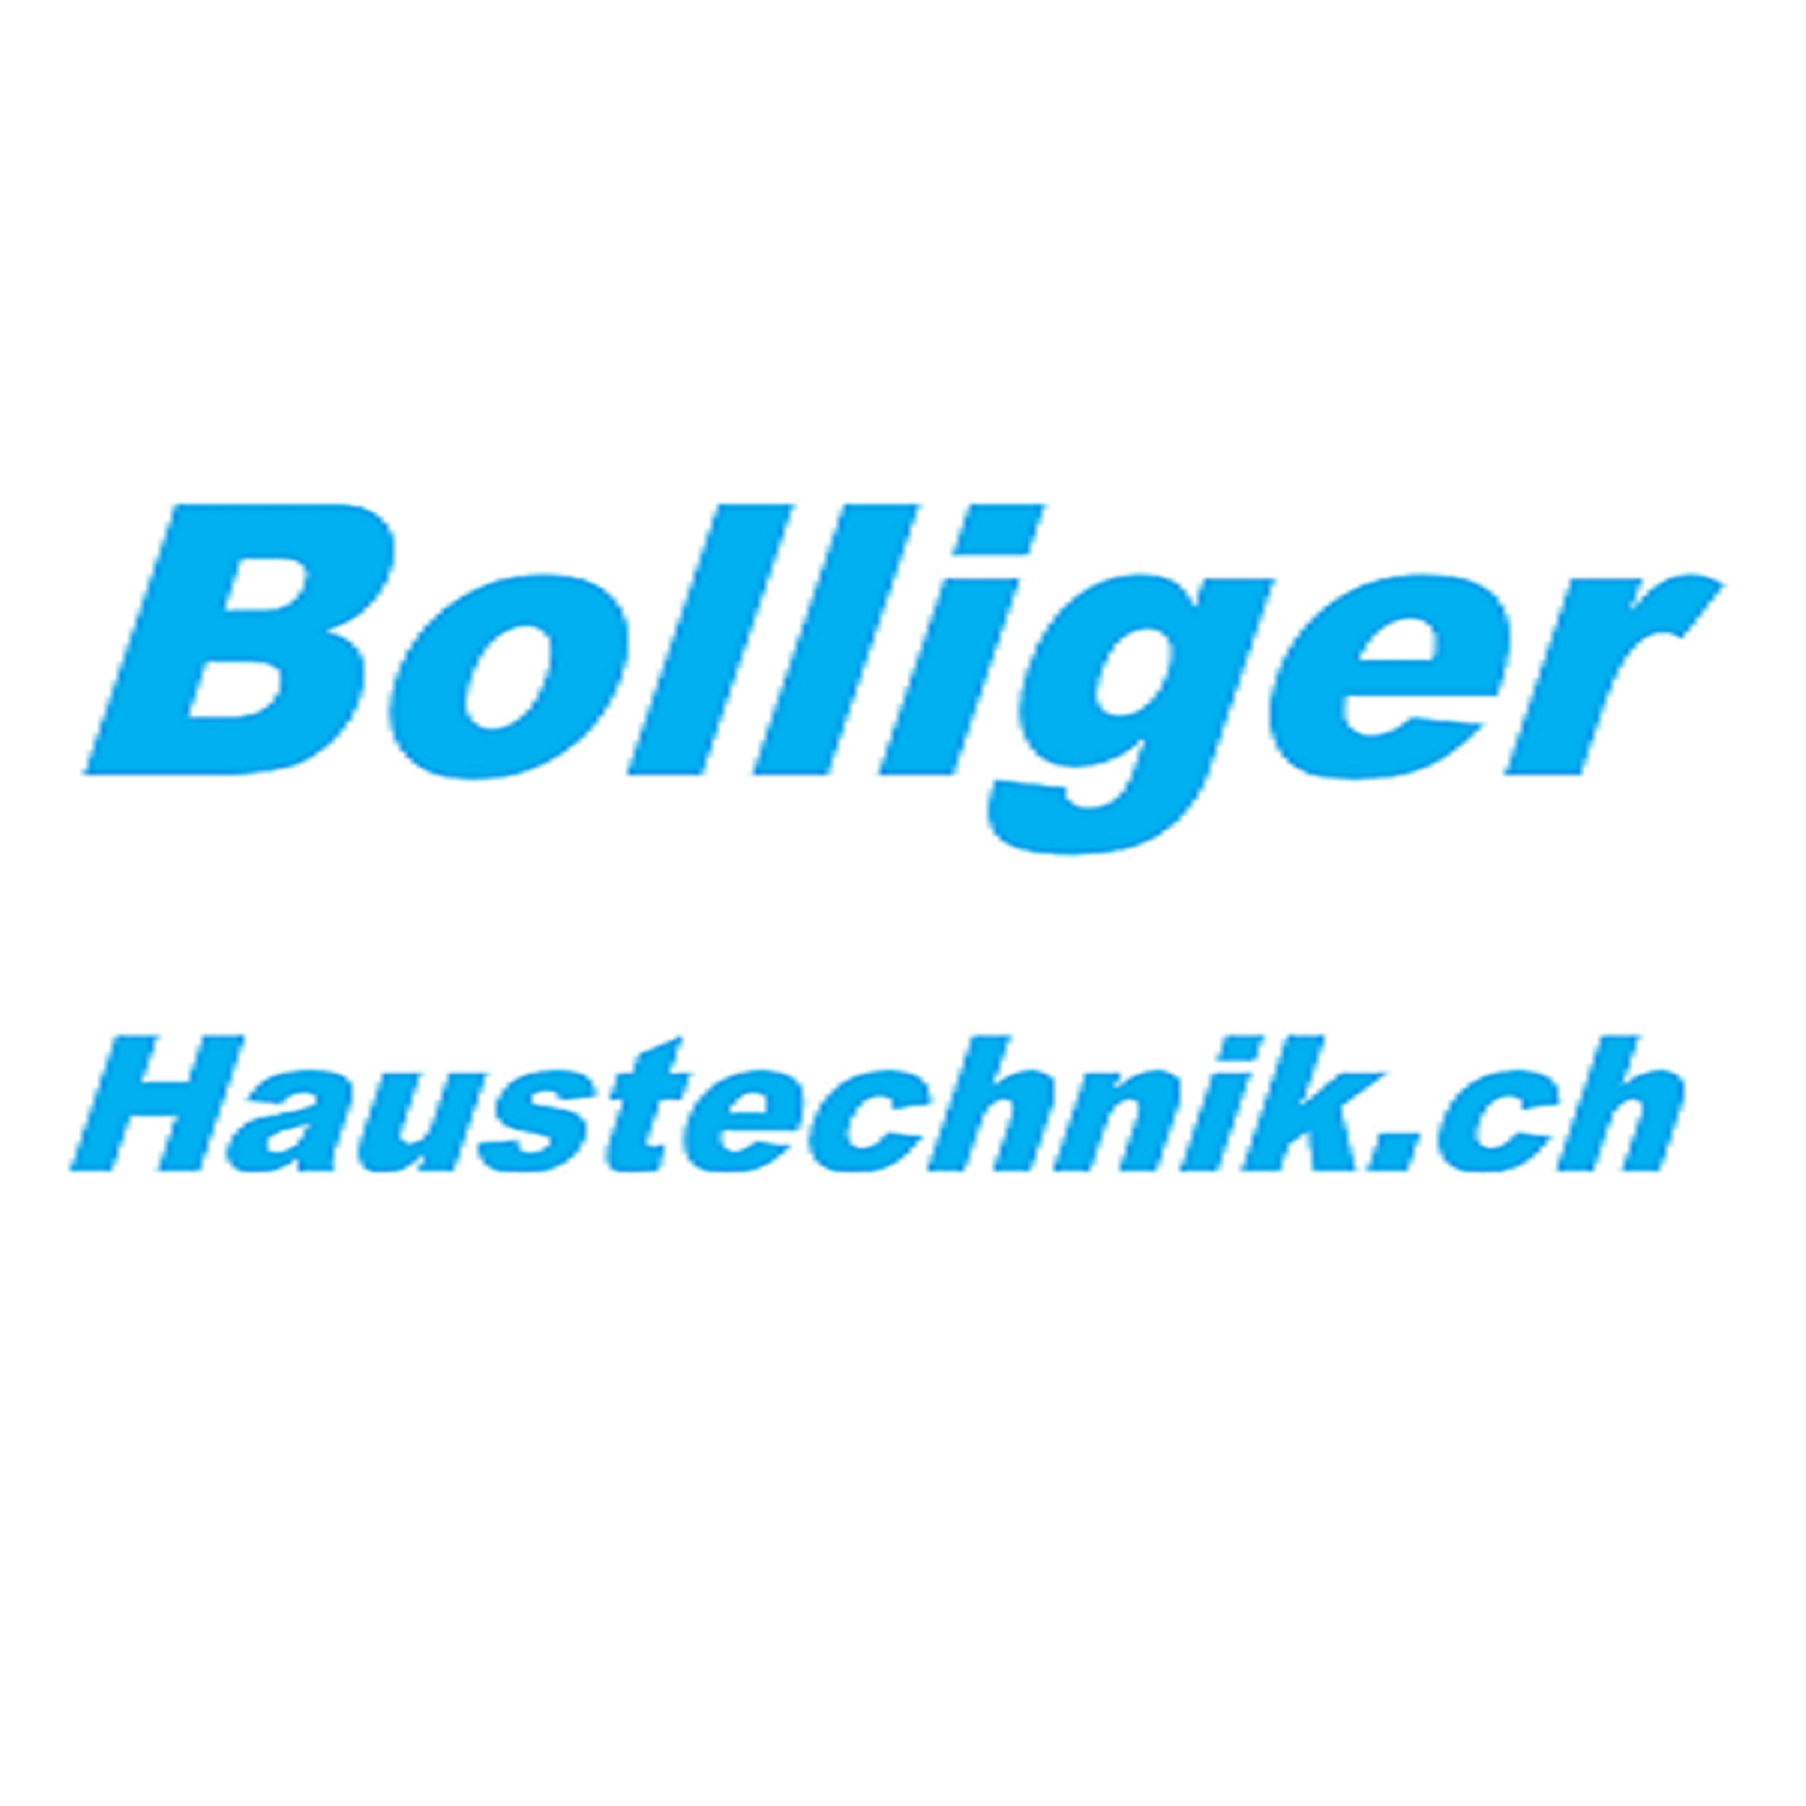 Bolliger Haustechnik Logo